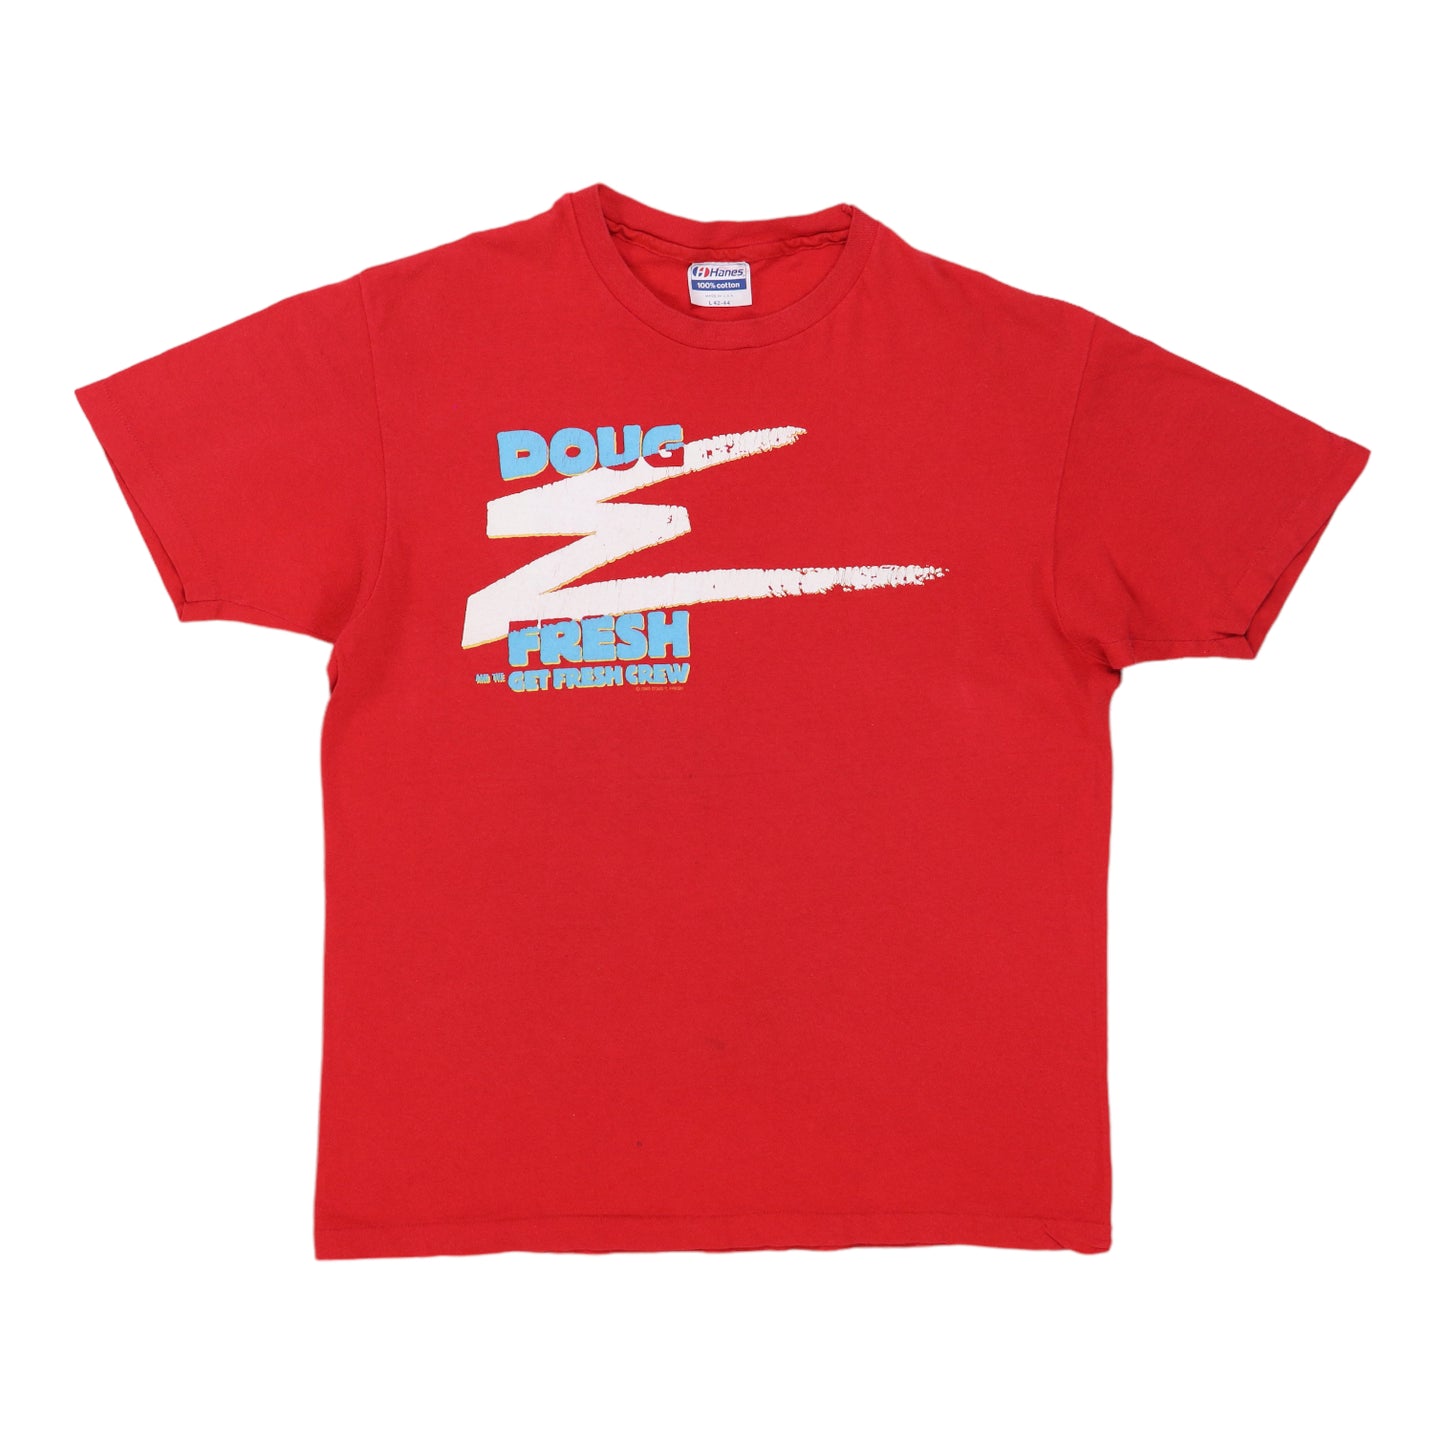 1988 Doug E Fresh And The Get Fresh Crew Shirt